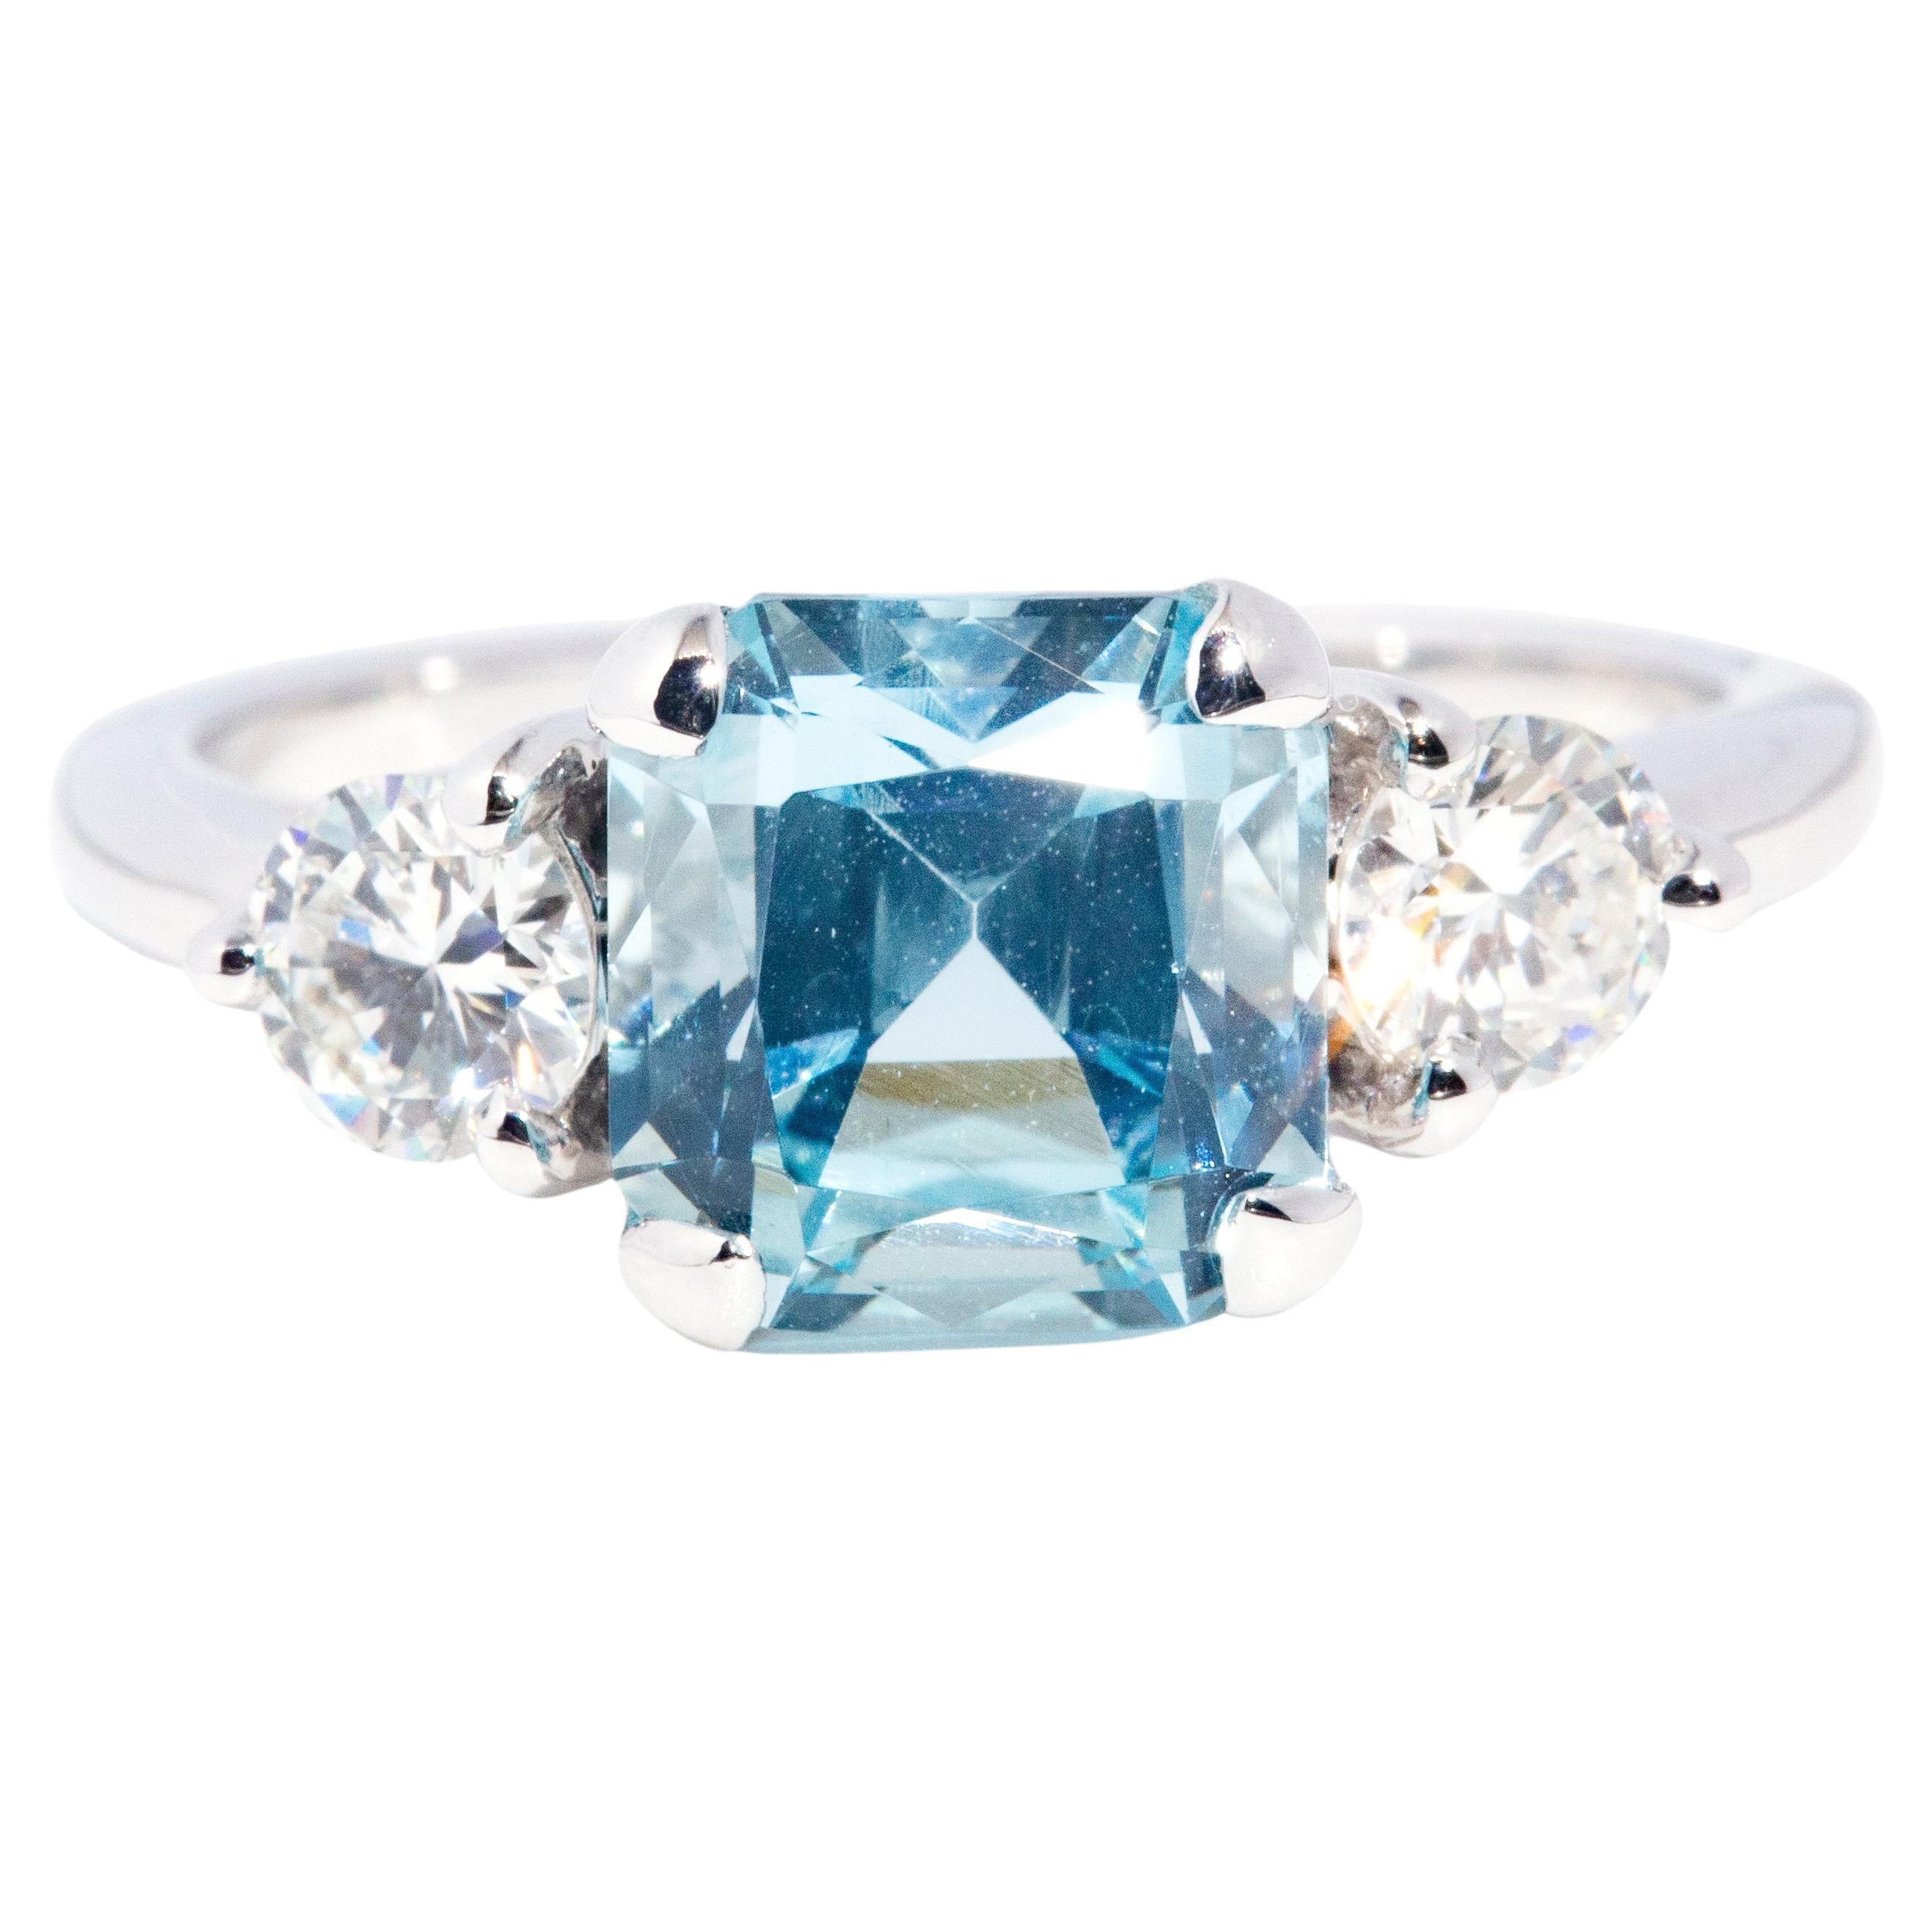 2.49 Carat Blue Aquamarine and 0.58 Carat Certified Diamond Contemporary Ring